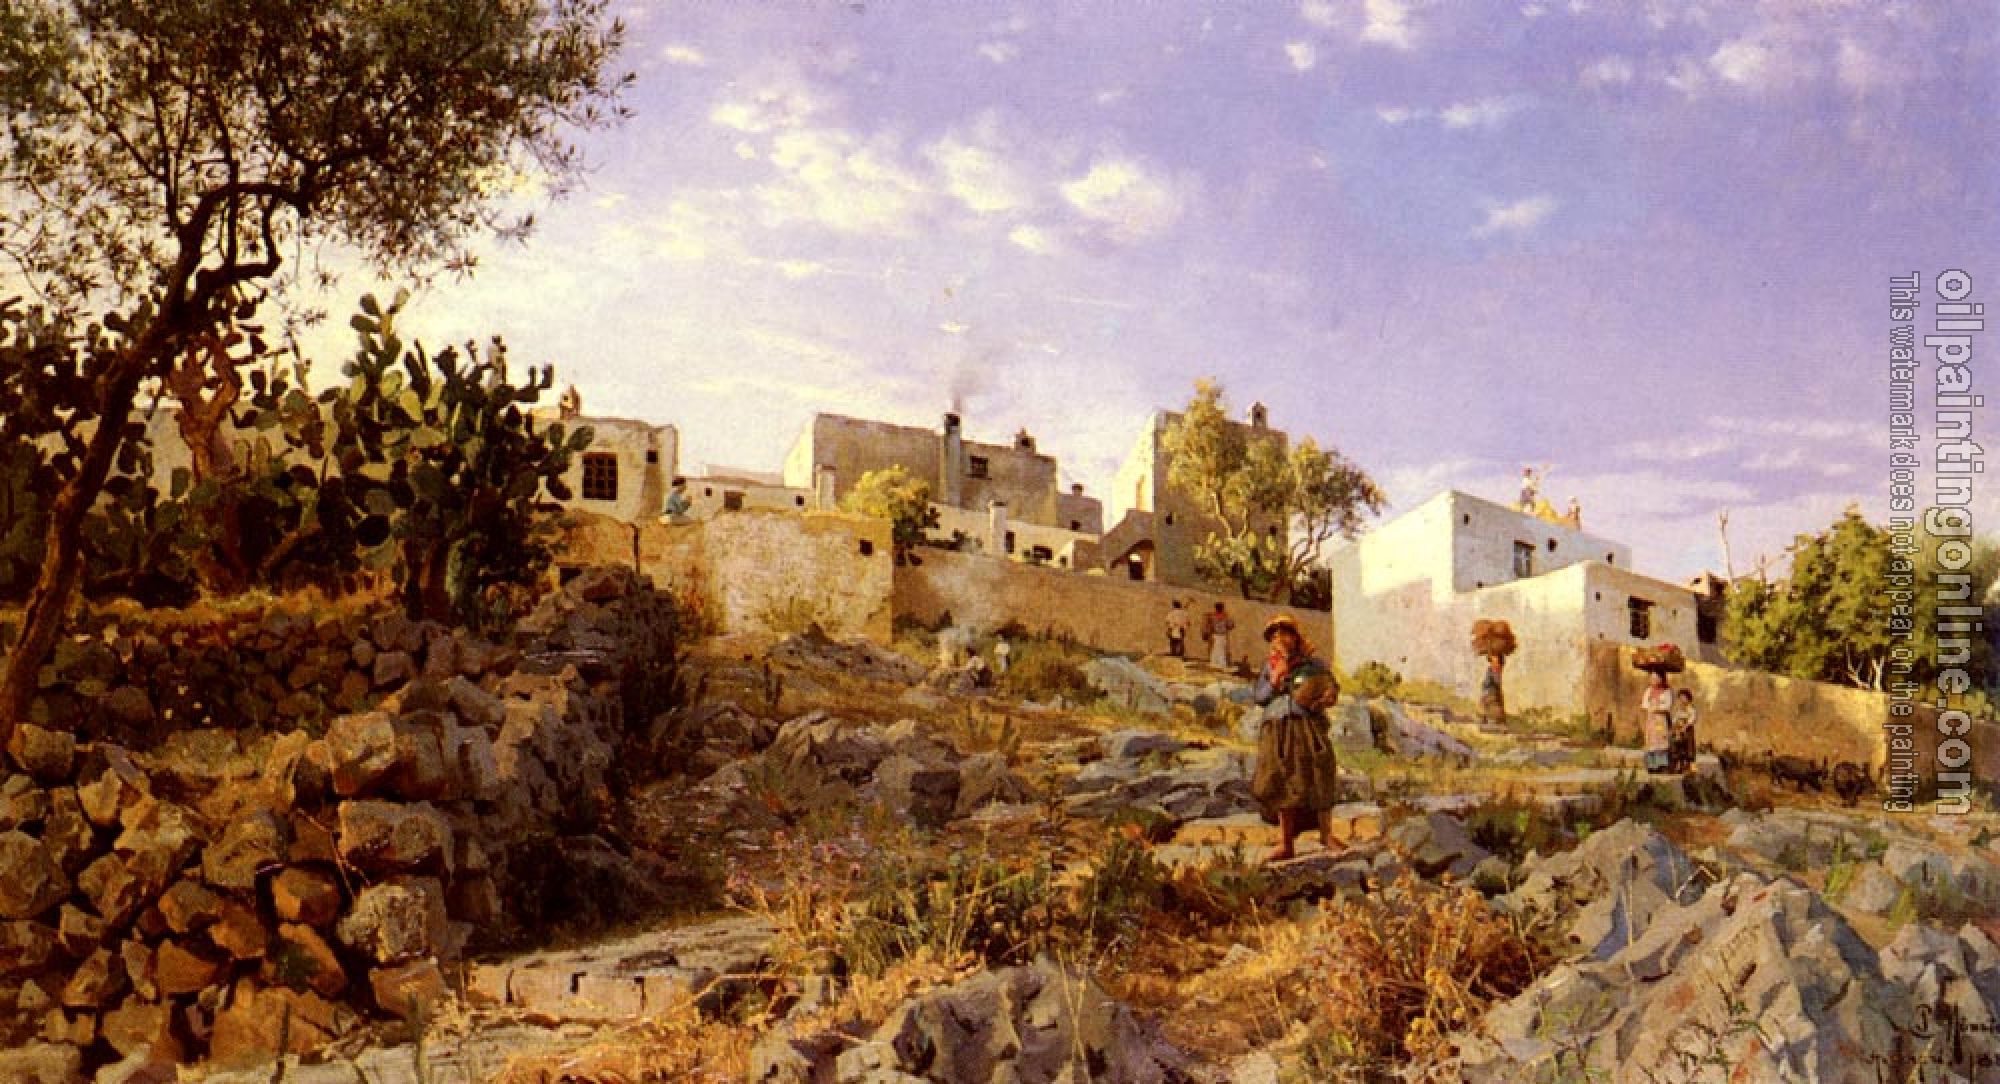 Monsted, Peder Mork - A View Of Anacapri